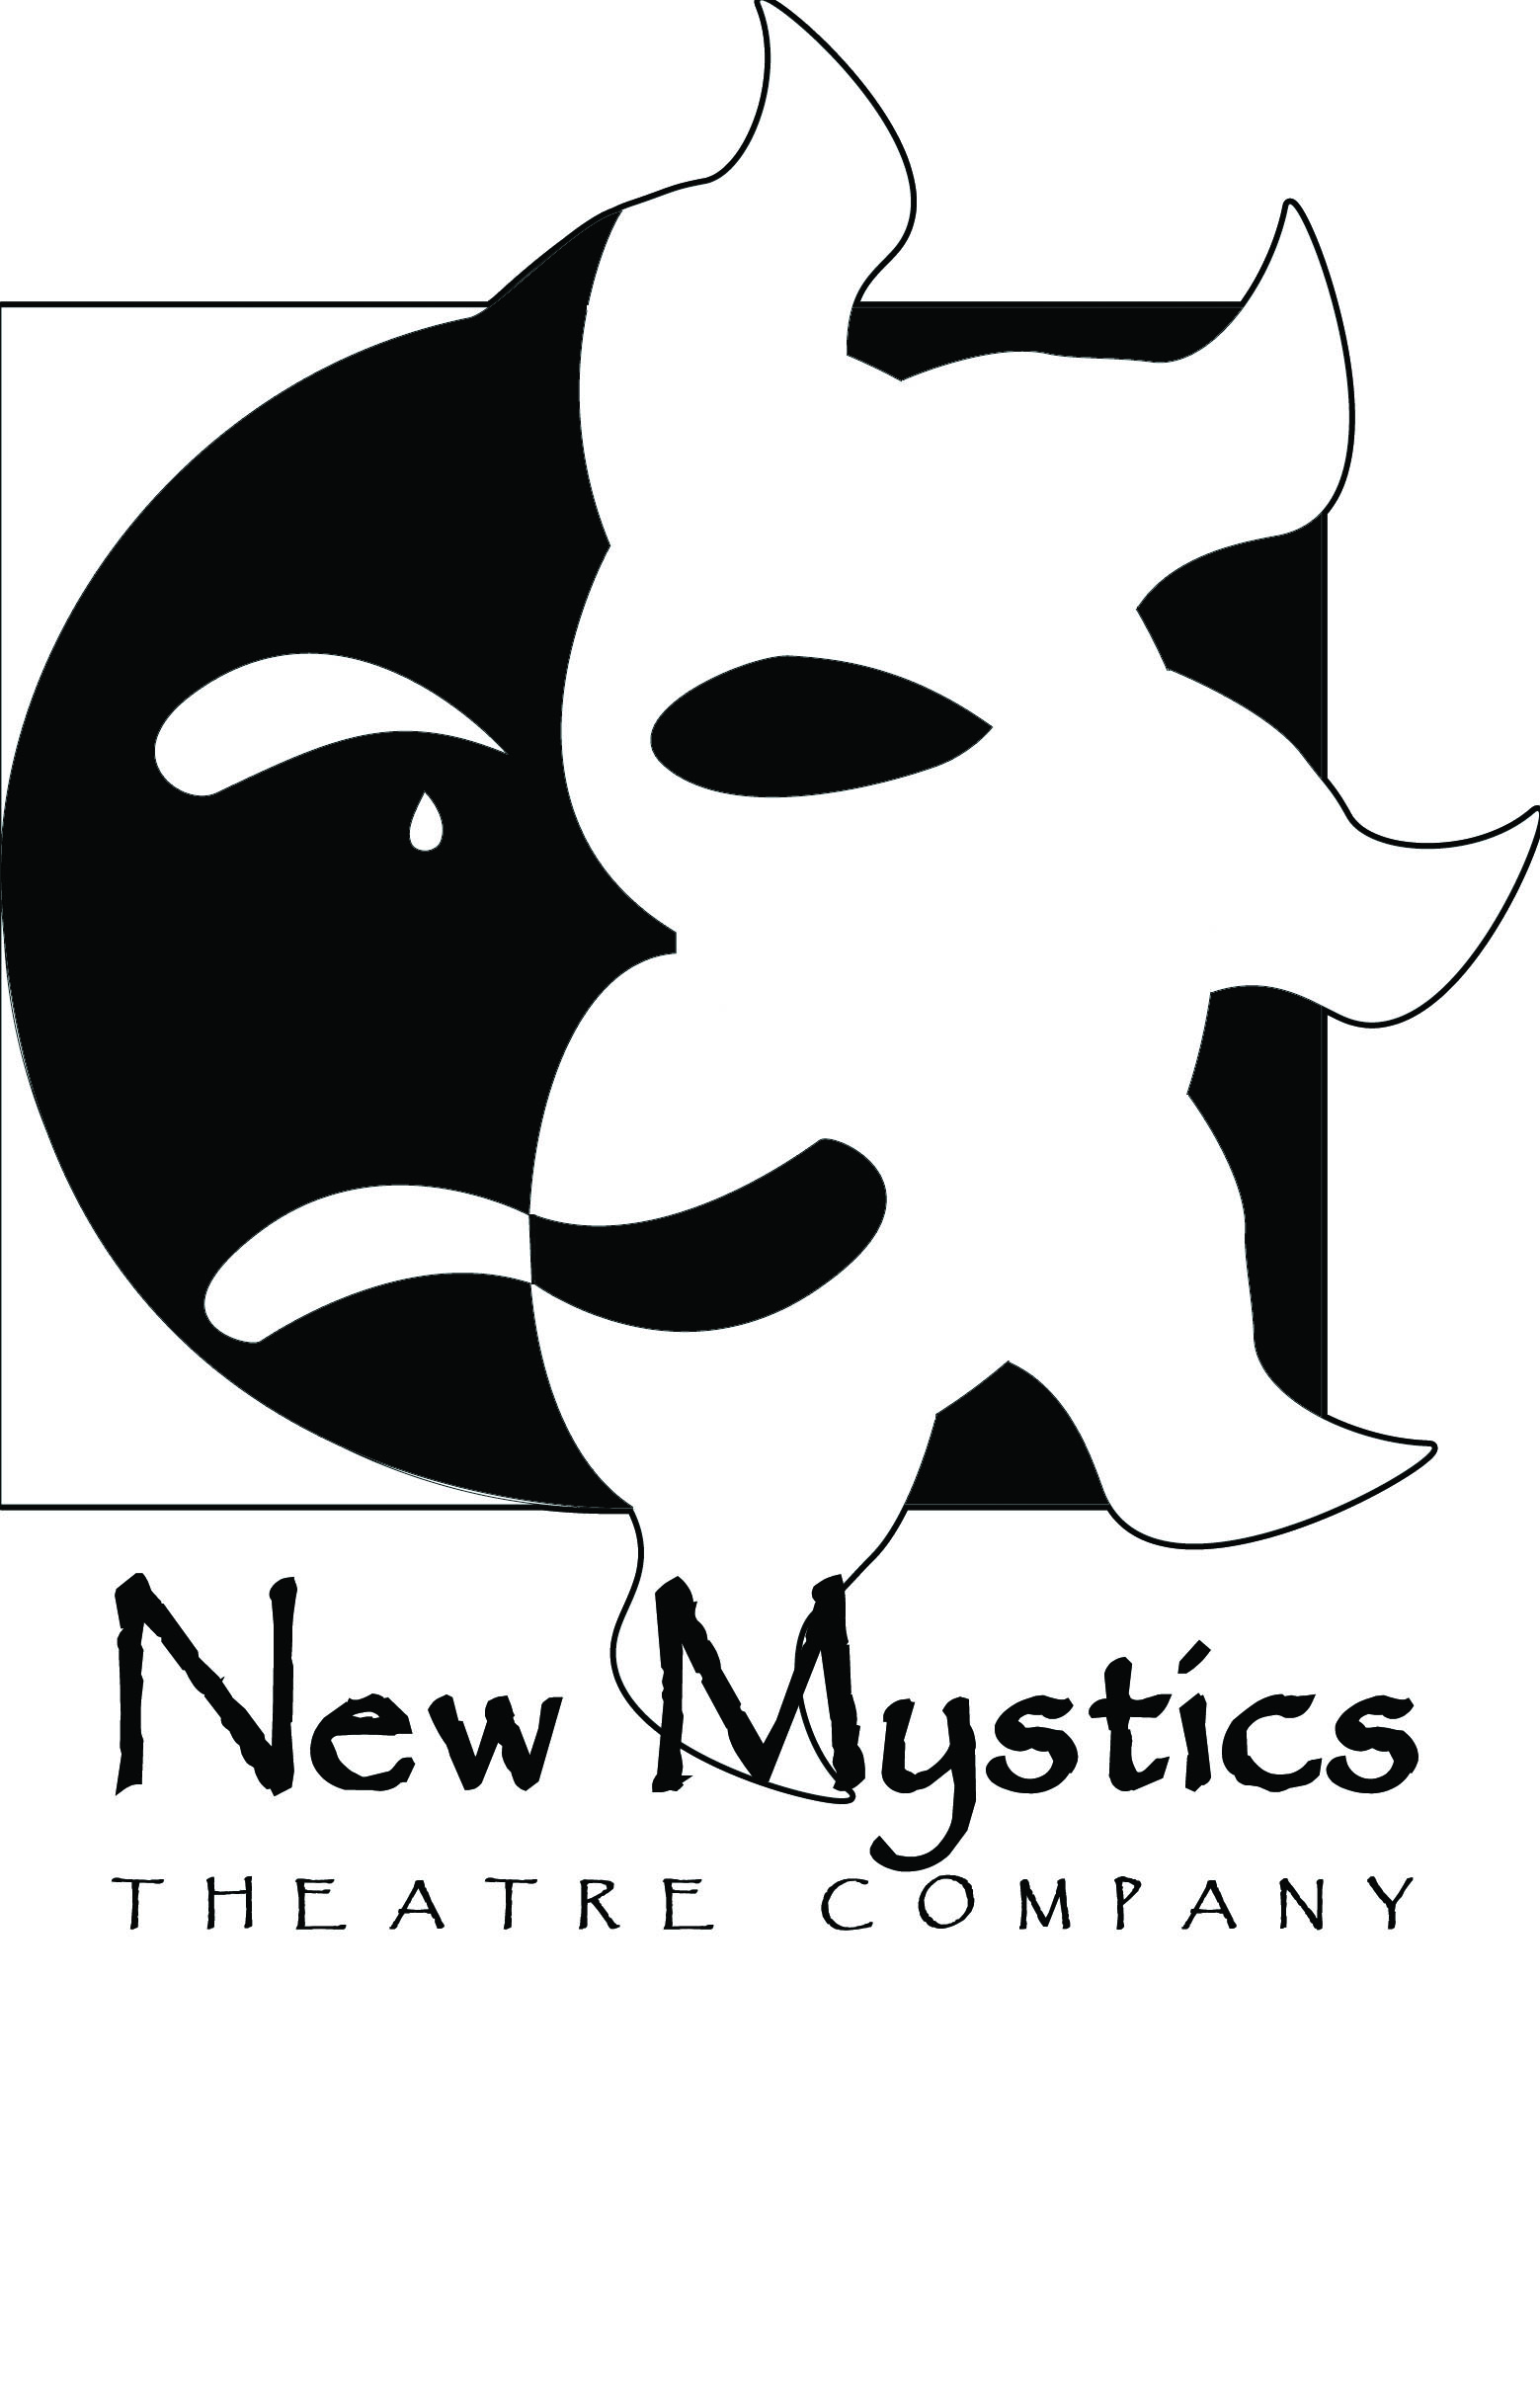 New Mystics Logo